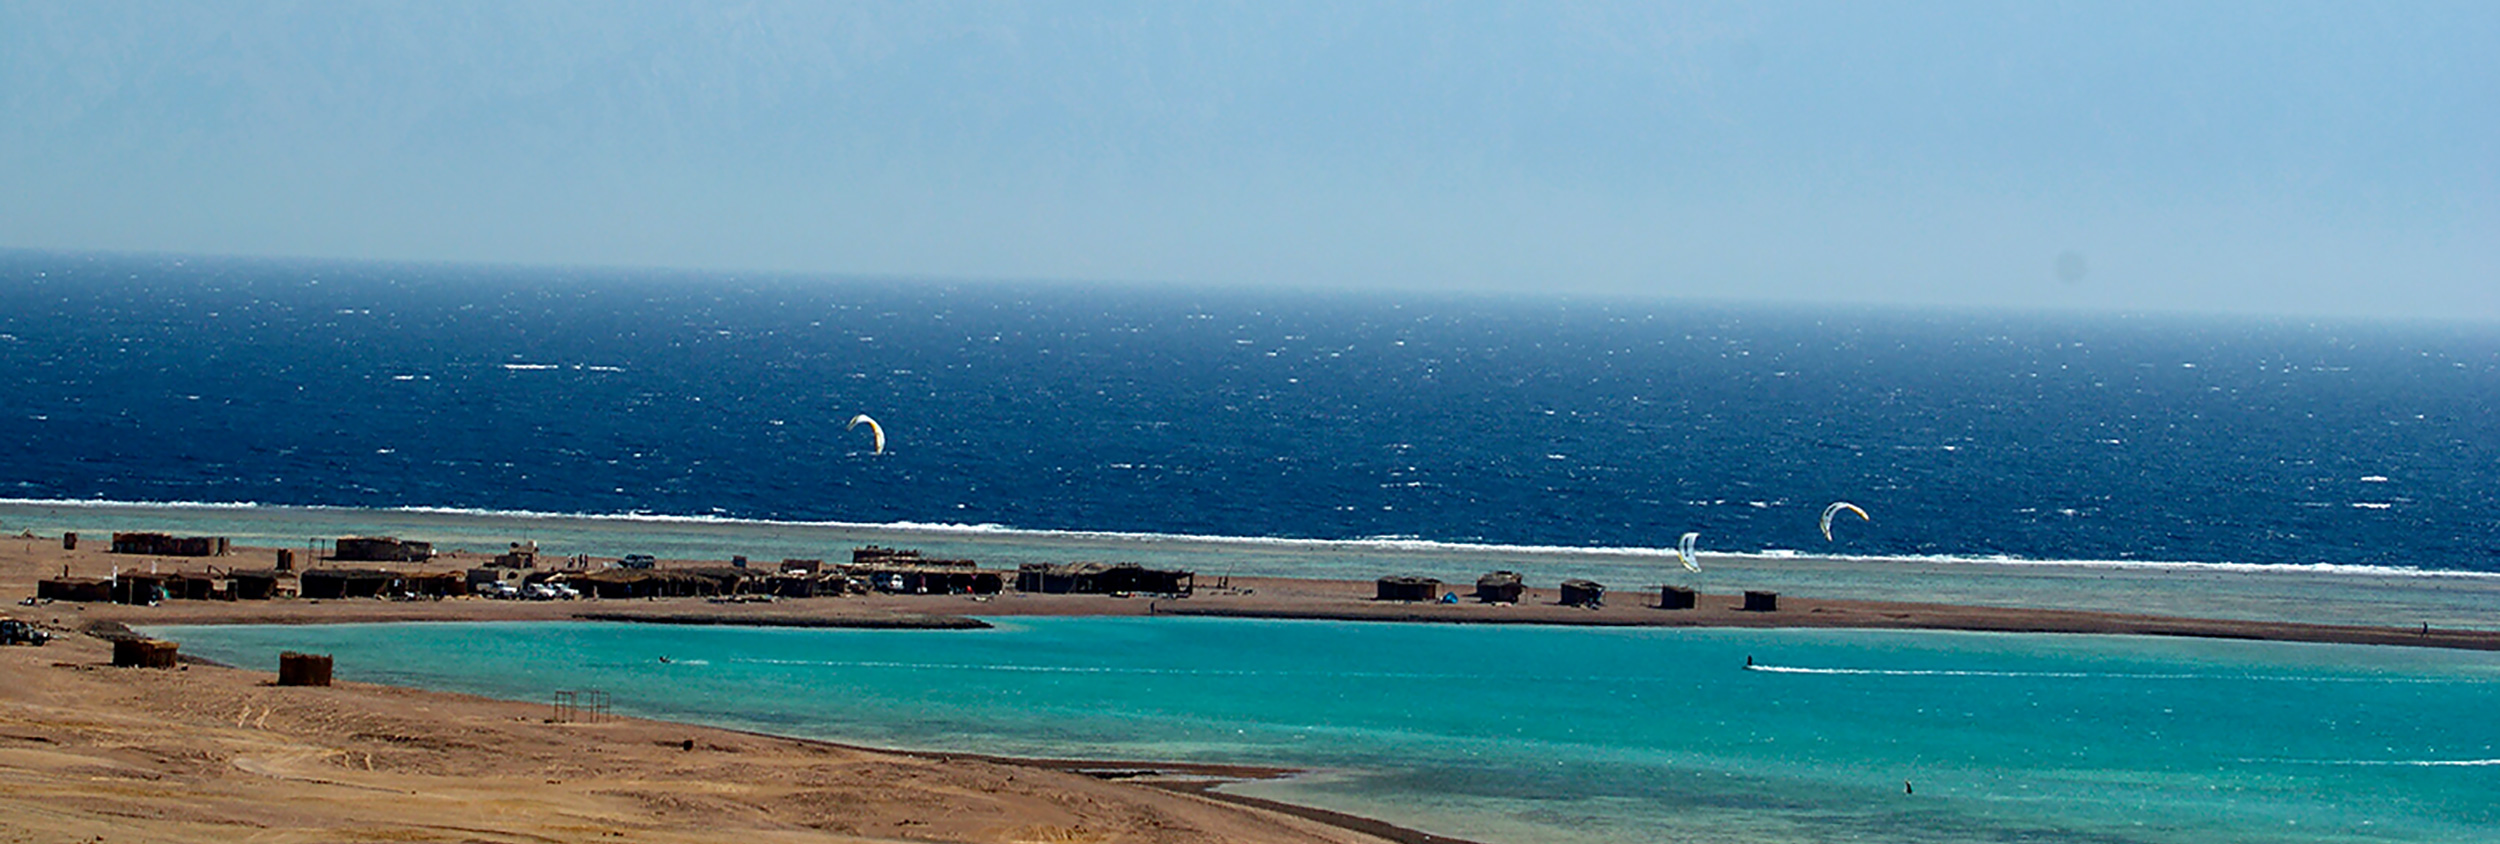 GP Kite school Egypt Dahab